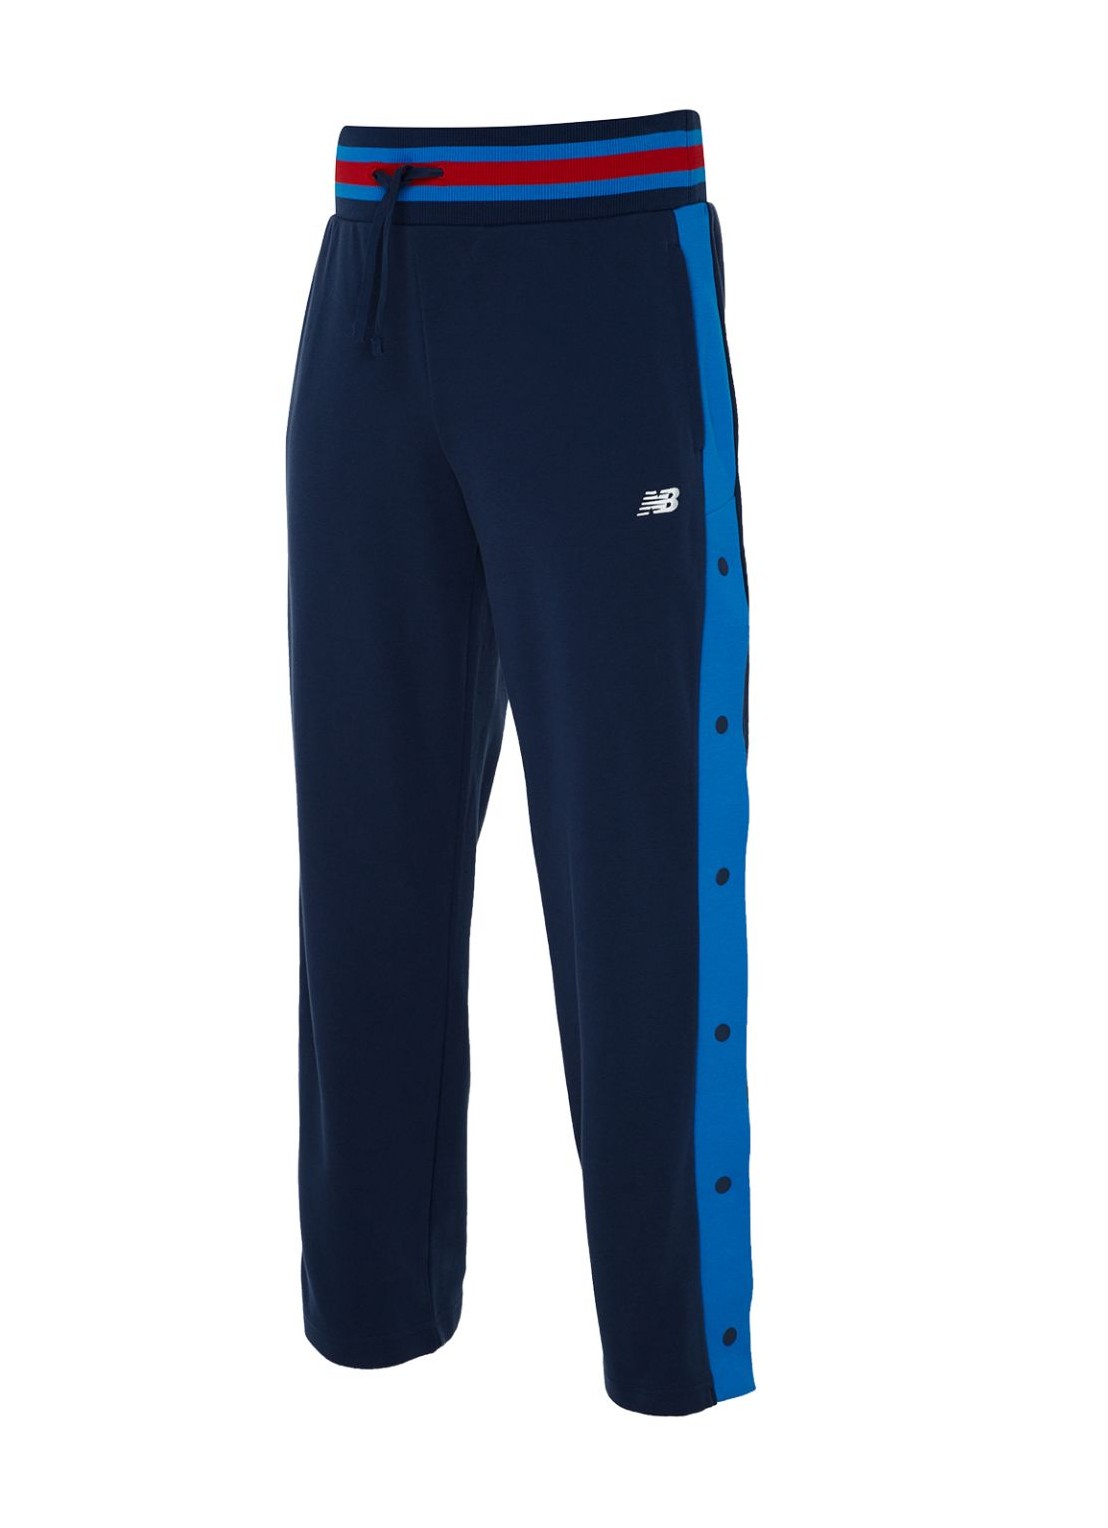 Pantalon new balance pant  mannb sportswear greatest hits french tee - mp41504nny nny talla Azul
 